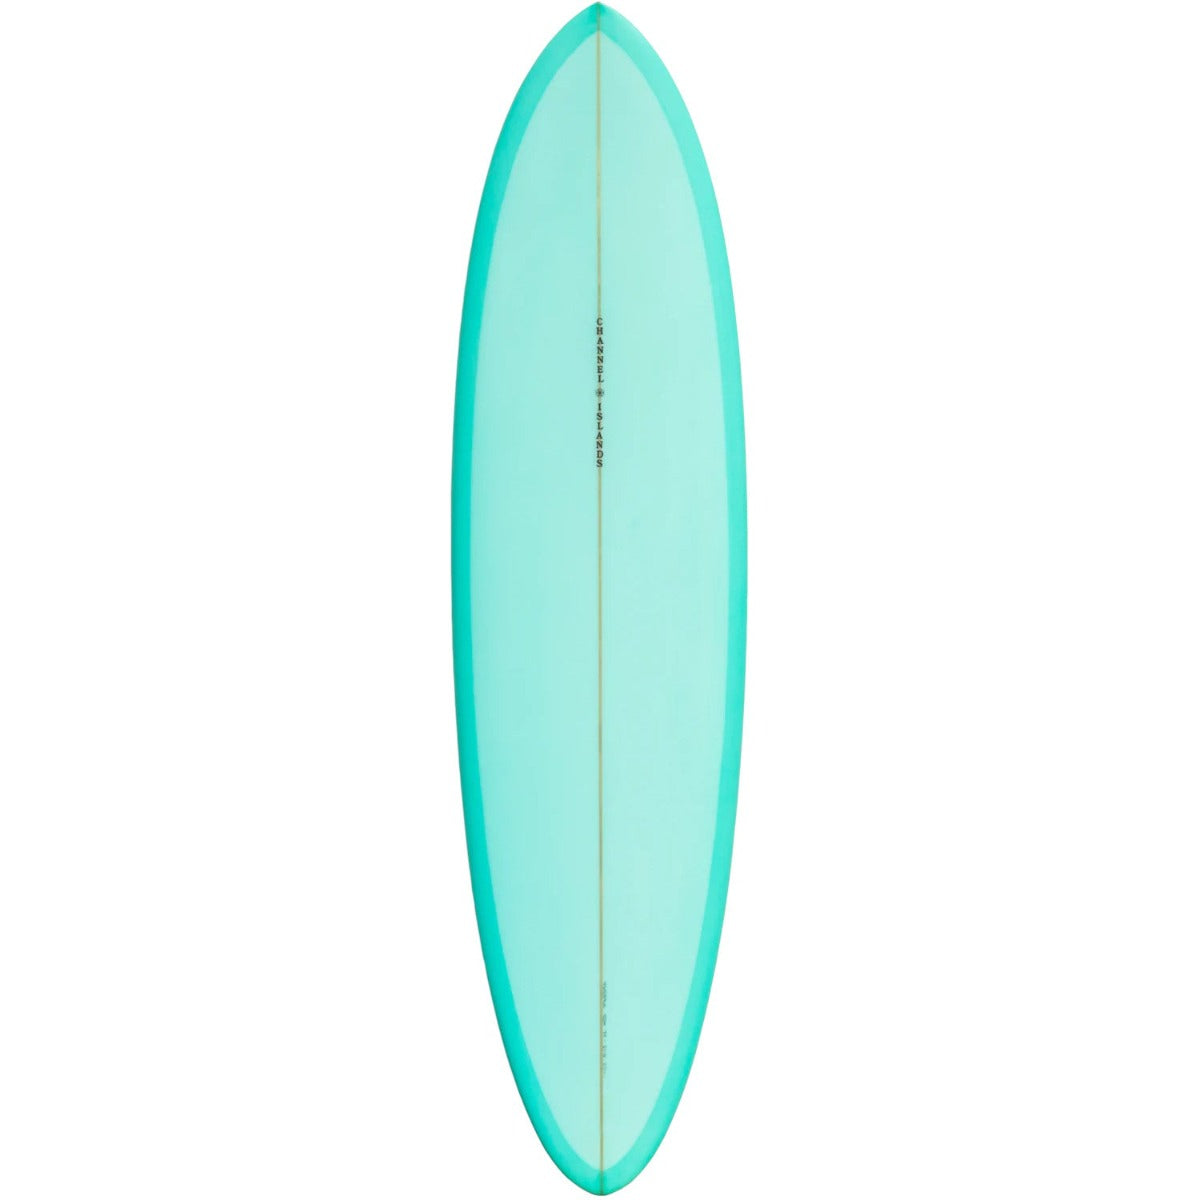 channel-islands-surfboards-midlength-ci-mid-green-deck-galway-ireland-blacksheepsurfco